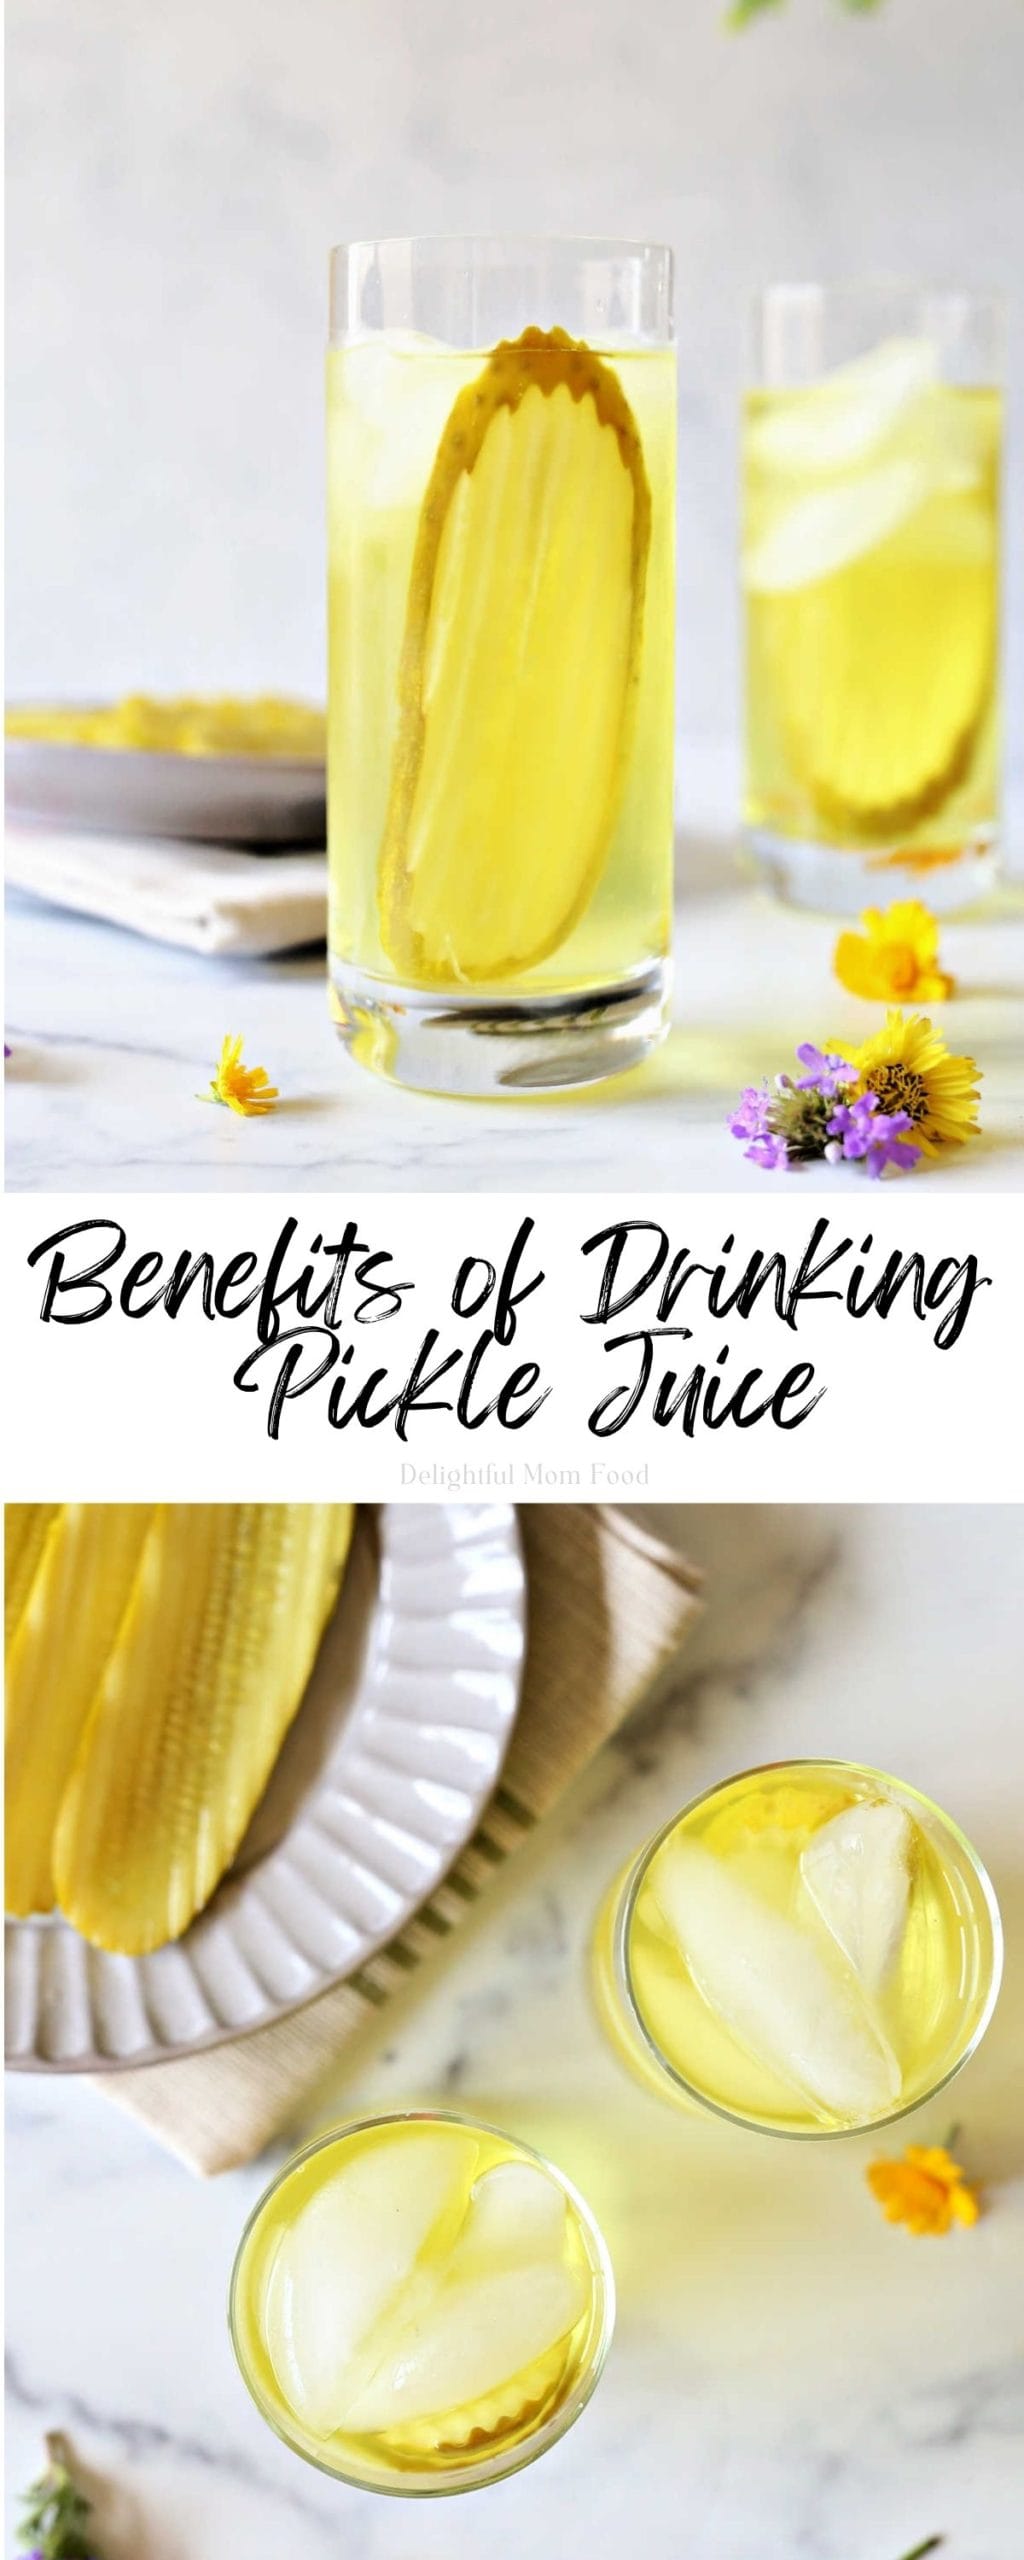 Benefits of Pickle Juice